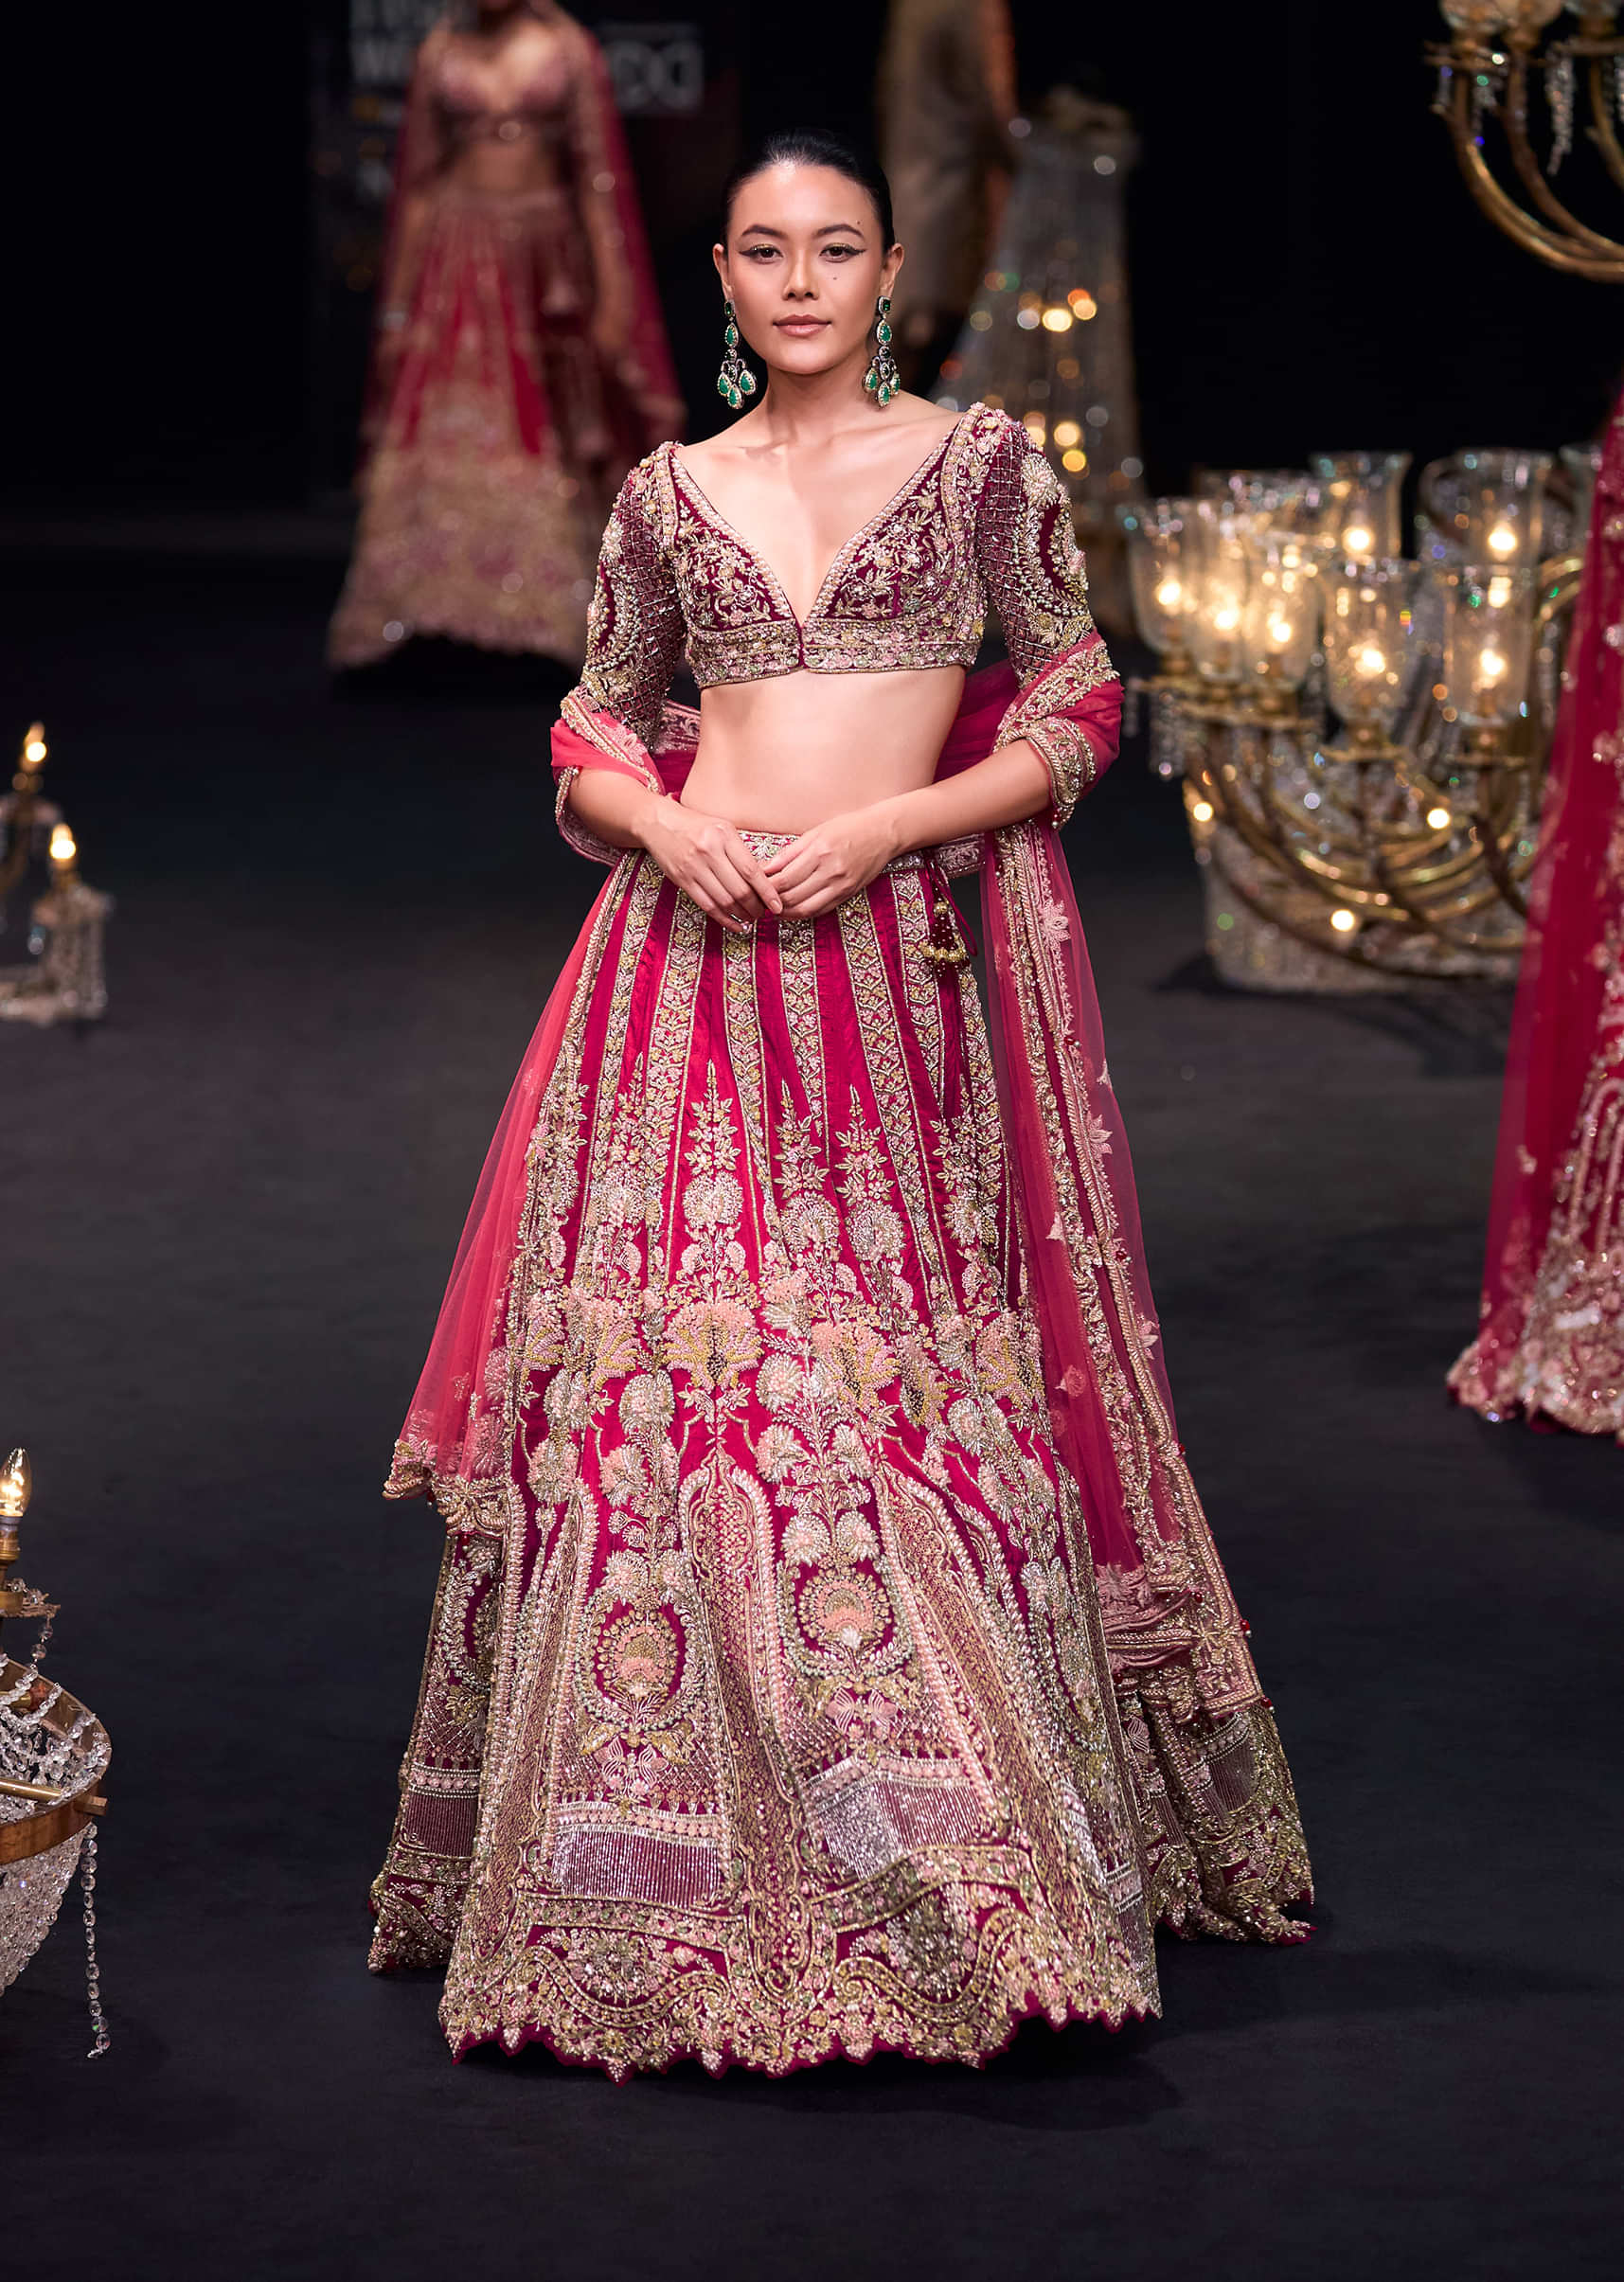 Buy Indian Bridal Lehengas & Wedding Lehengas Online